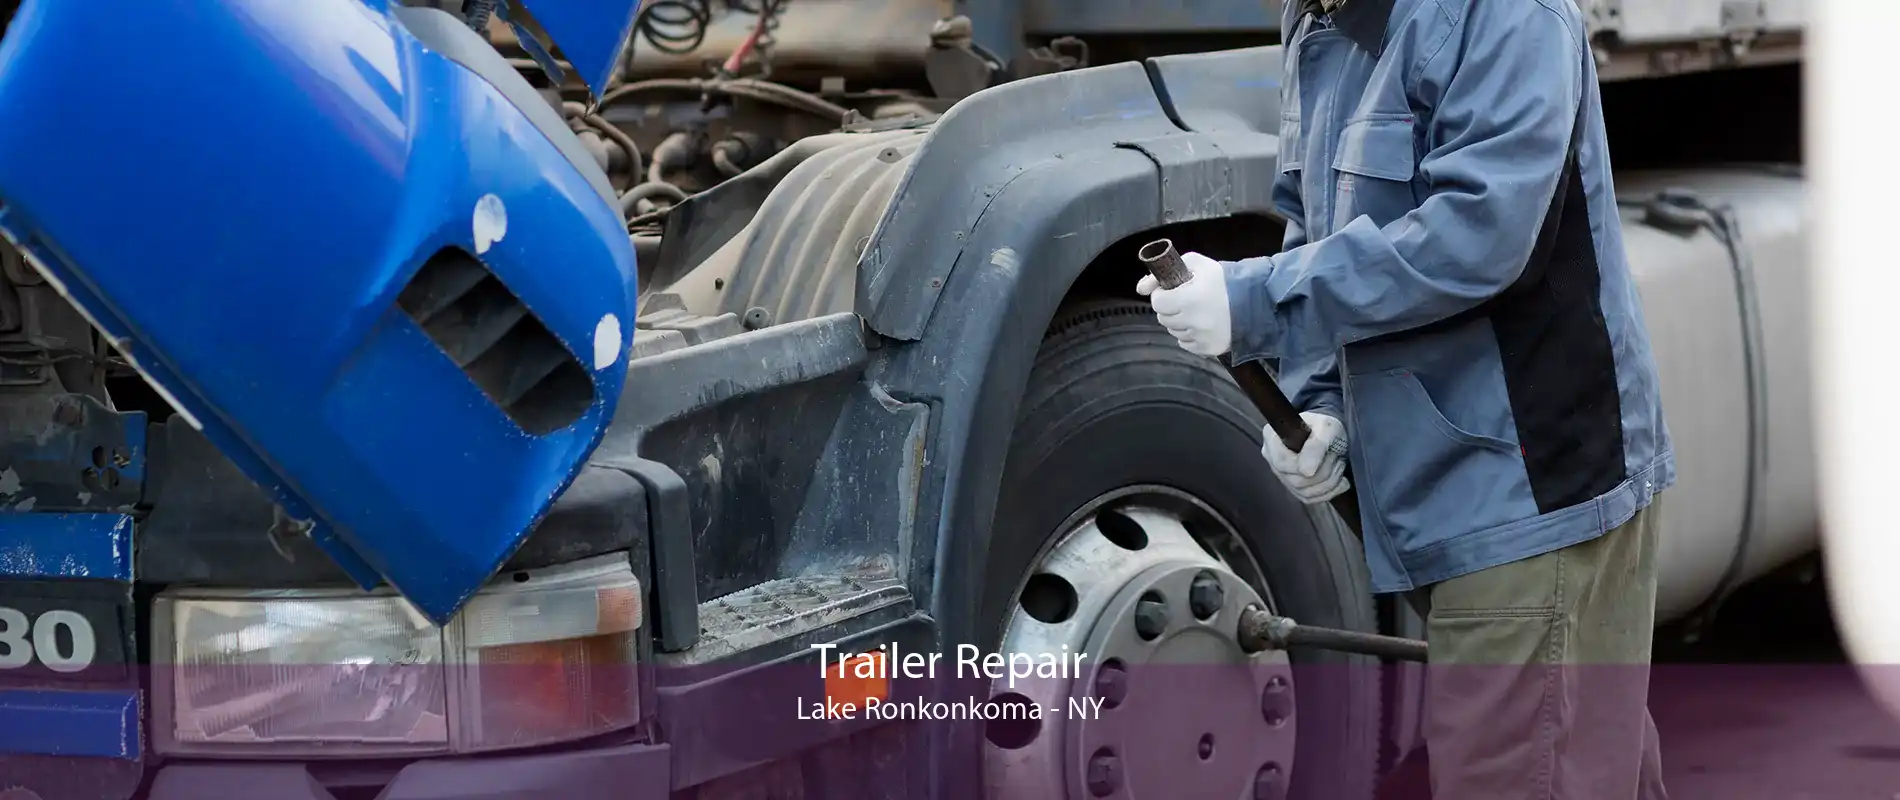 Trailer Repair Lake Ronkonkoma - NY